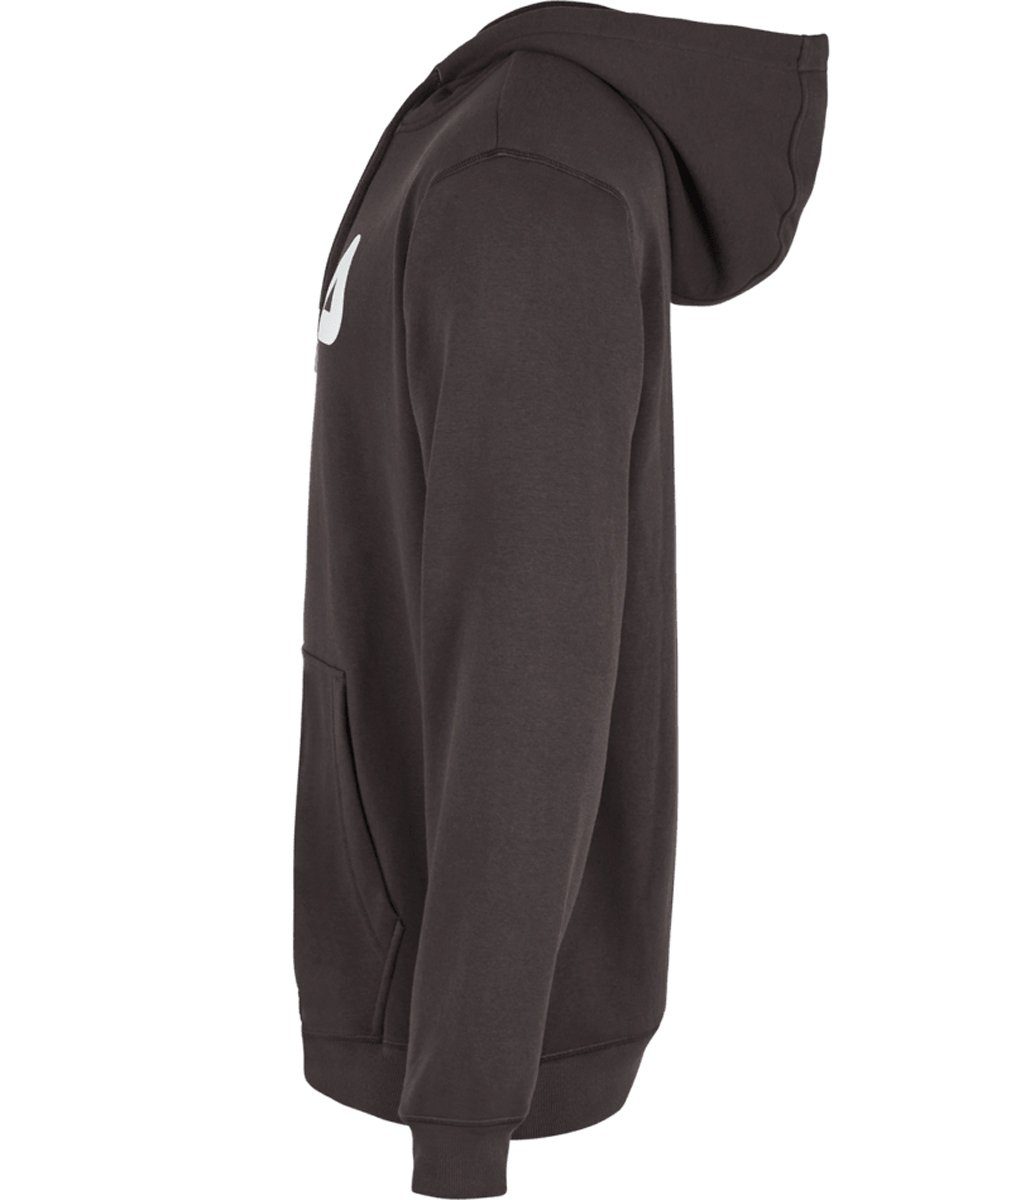 Hoodie hoody, Sweatshirt Dunkelgrau BARUMINI Fila - Unisex Sweater